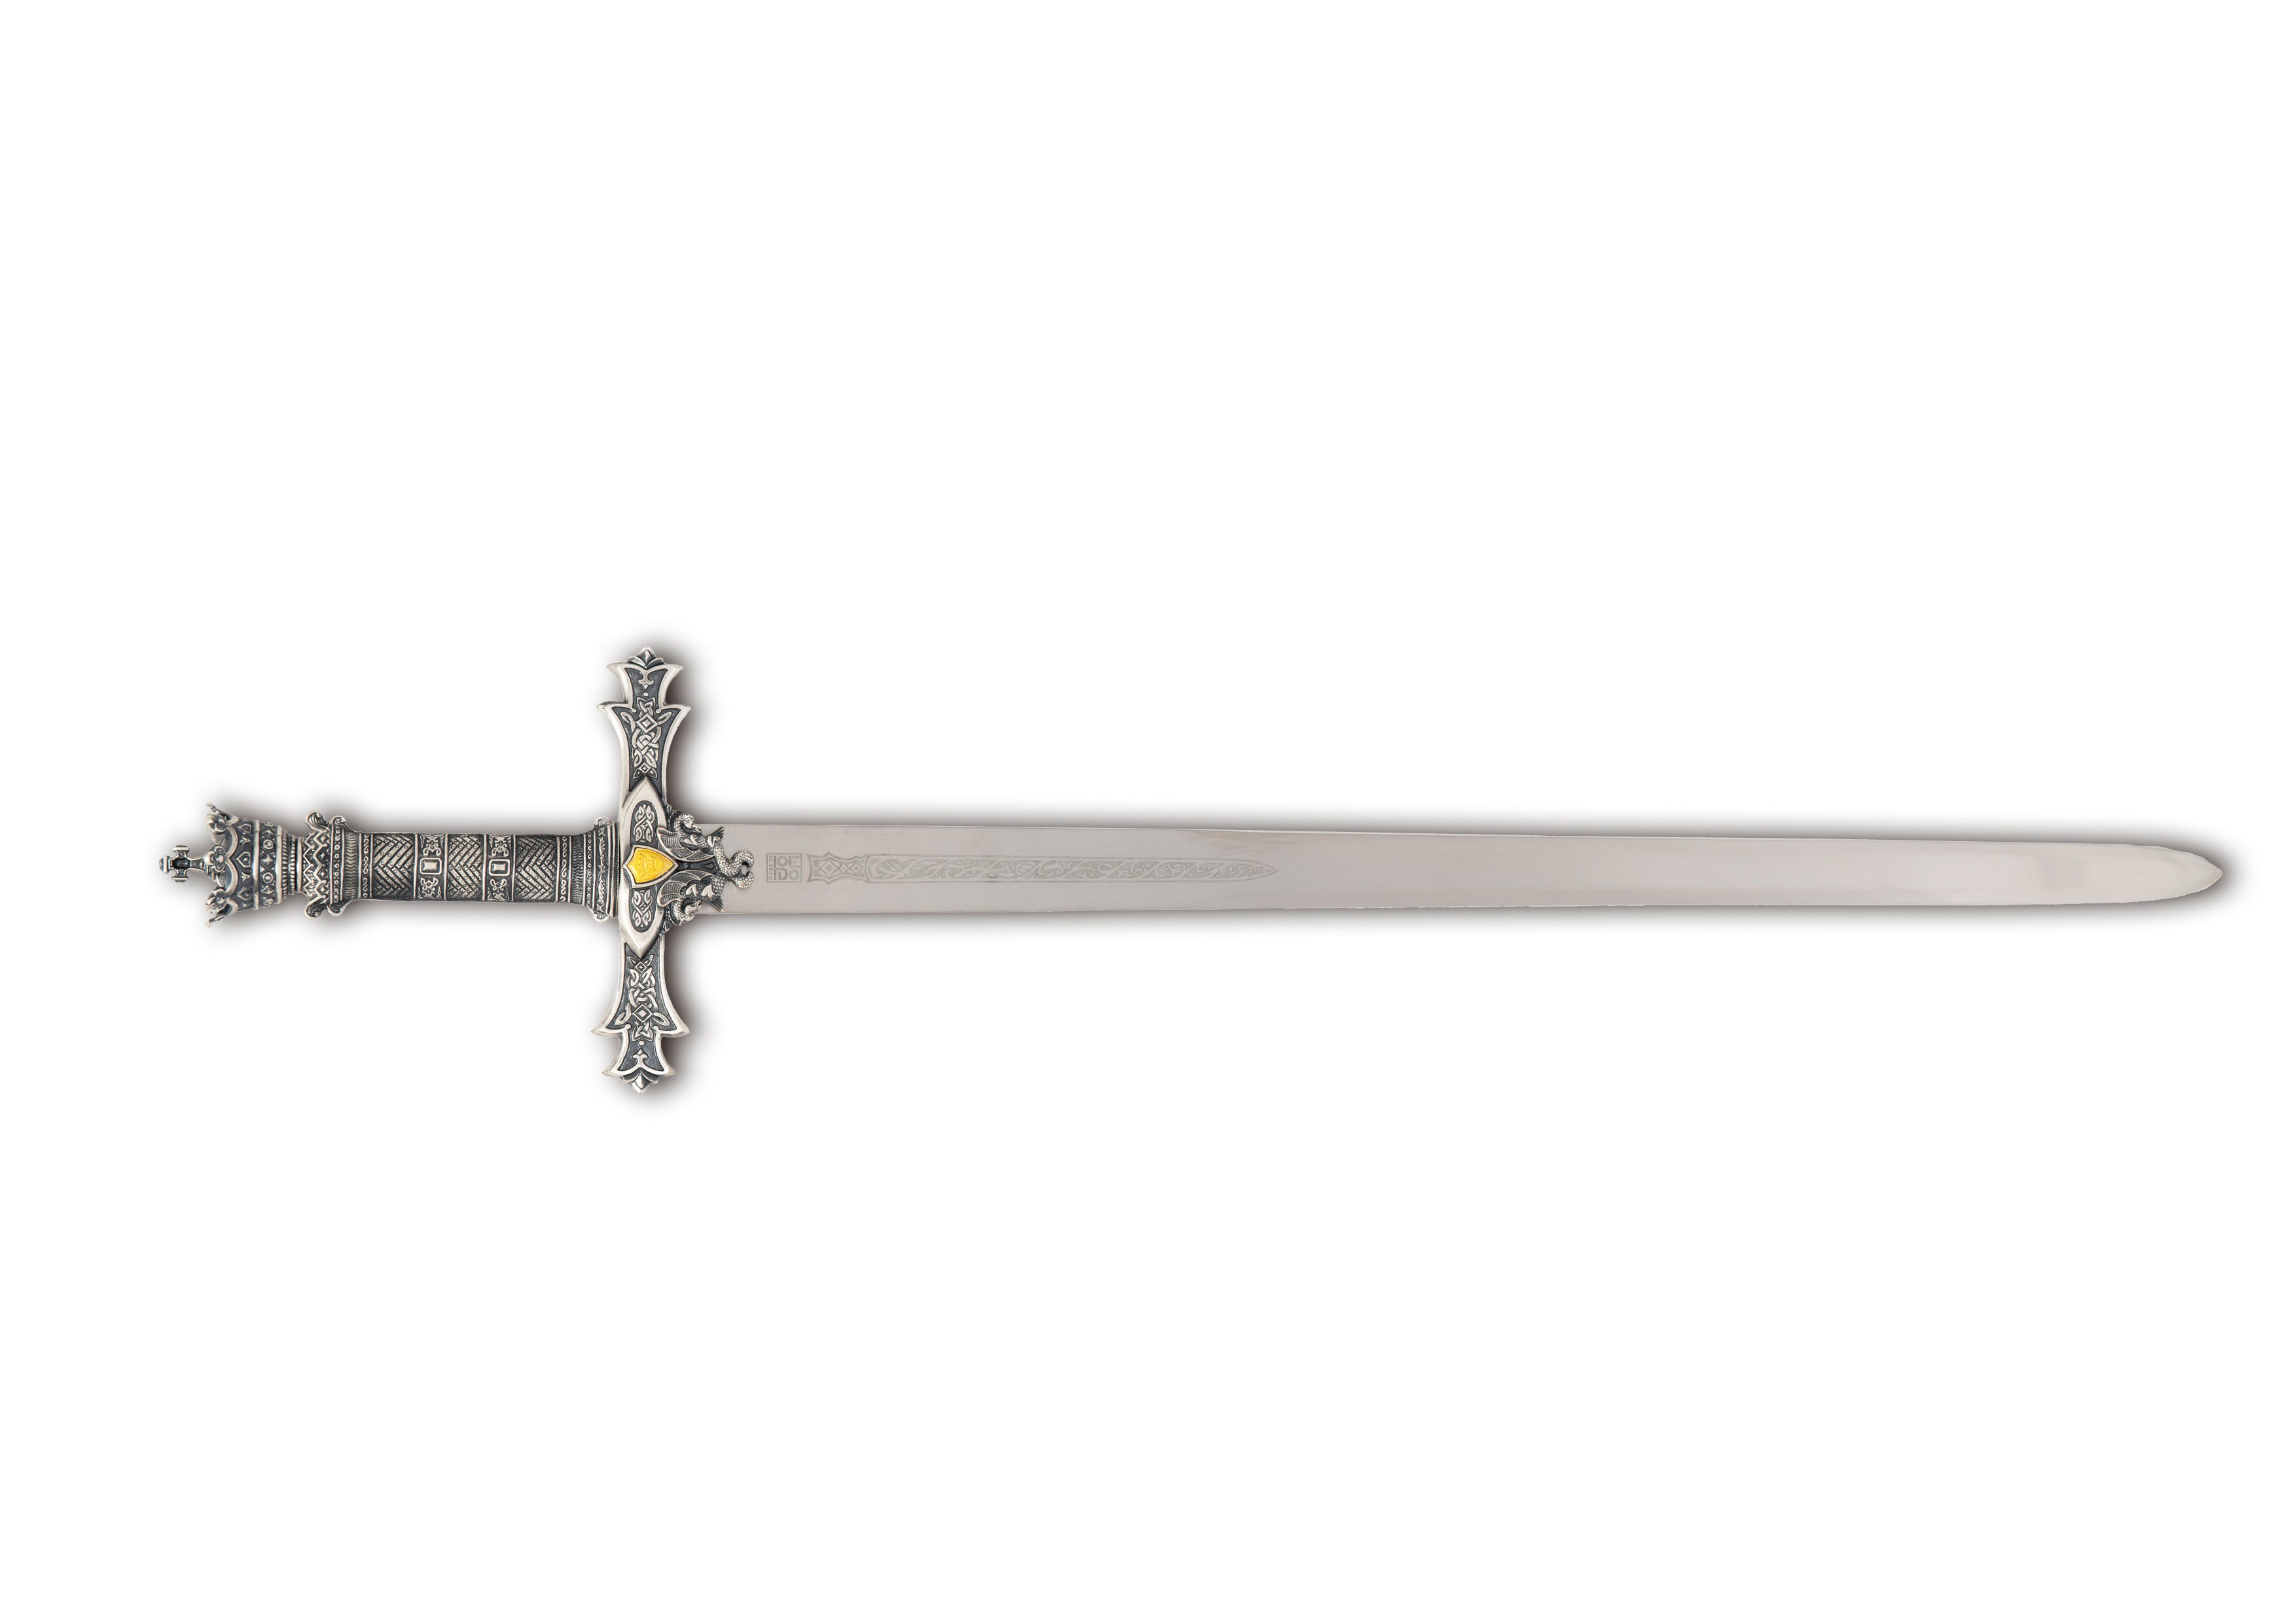 King Arthur Small Sword